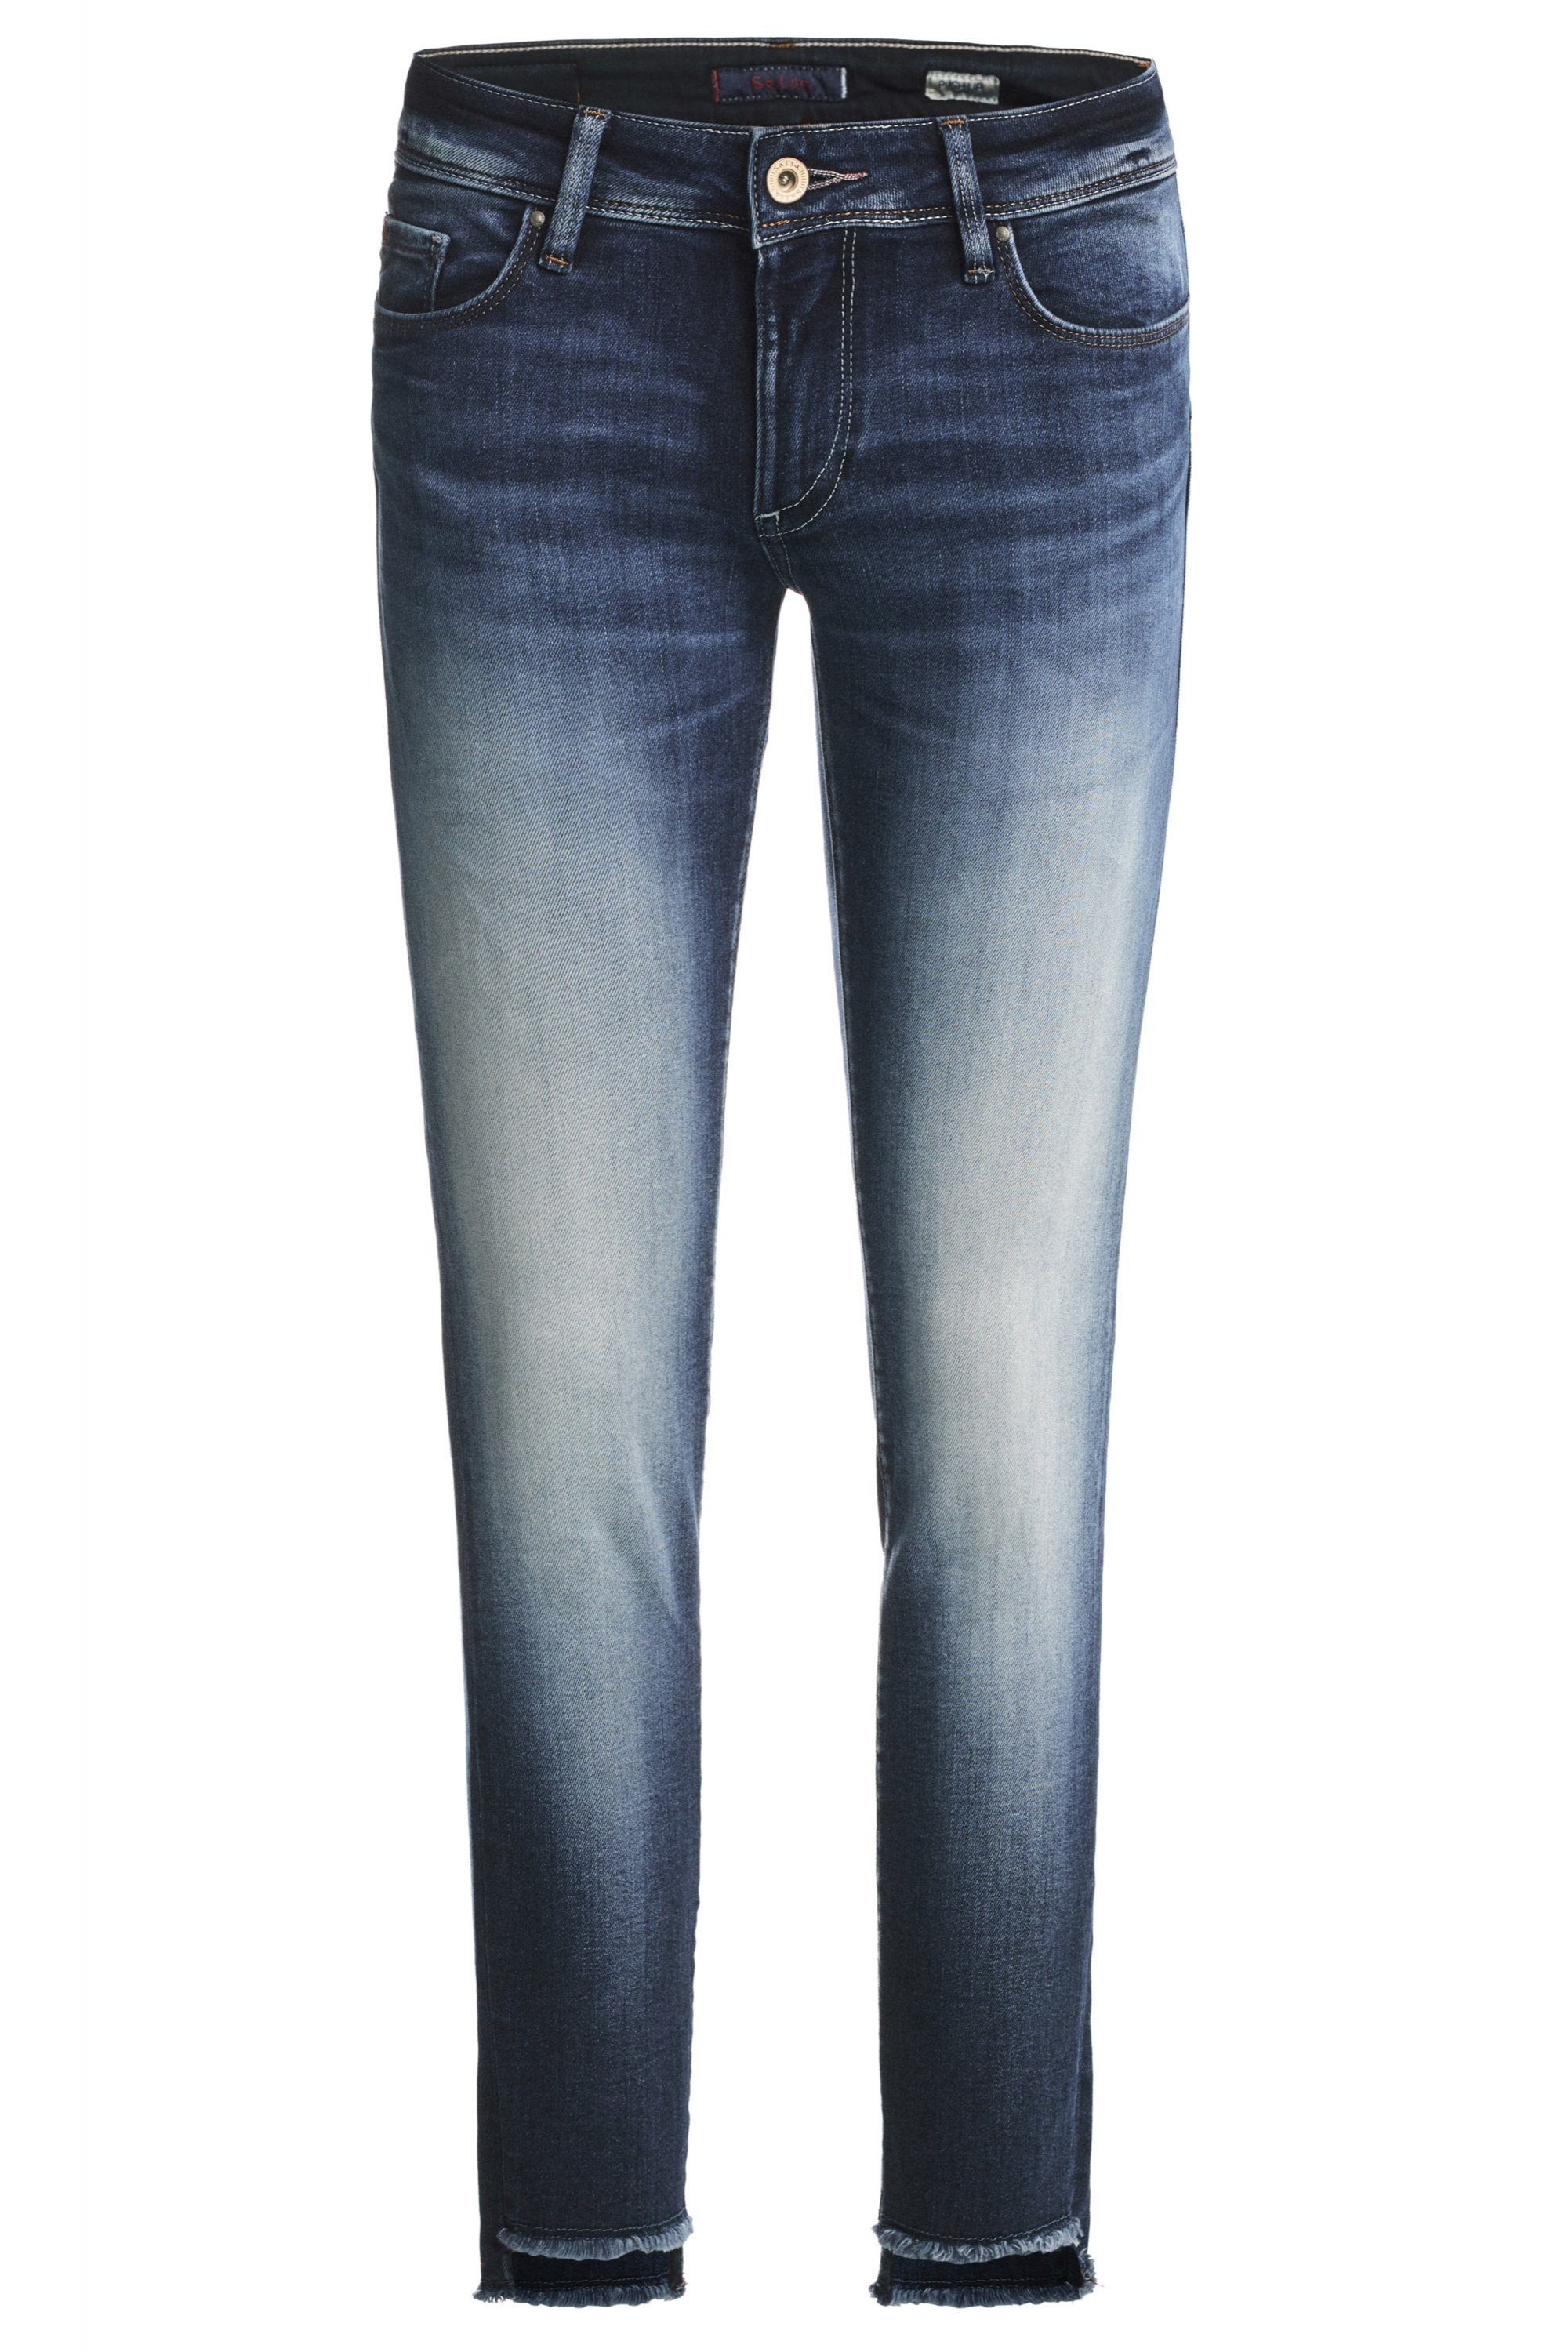 UP JEANS premium PUSH CAPRI blue Stretch-Jeans SALSA waschung 120169.8504 WONDER Salsa